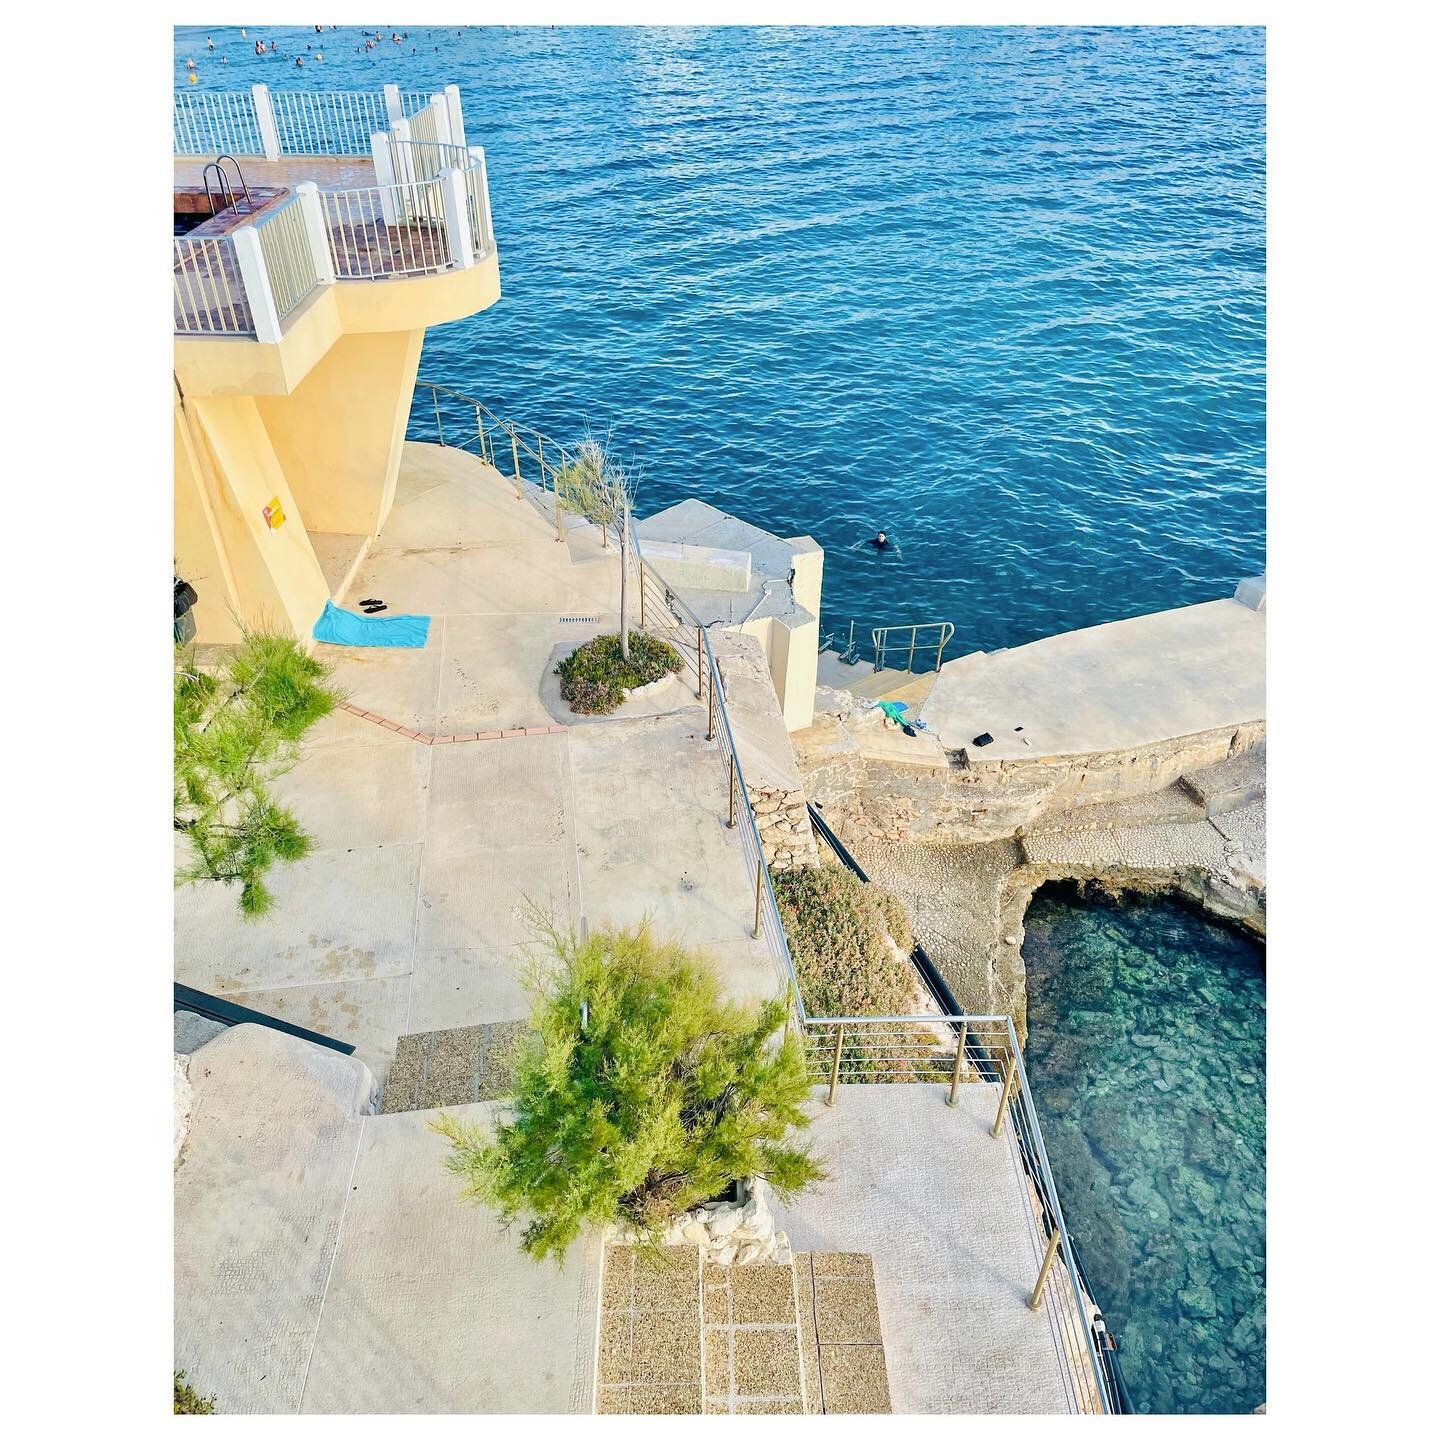 PLONGEOIR ARCHITECTURAL
.
.
.
@cnmarseille #cnmarseille #promontoire #beton #promenade #swimming #sealife #summervibes #summerlife #staircase #shadesofblue #shadesofmagic #mediterraneansea #mediterraneanlife #seaview #mediterranean #swimmingtime  #ma